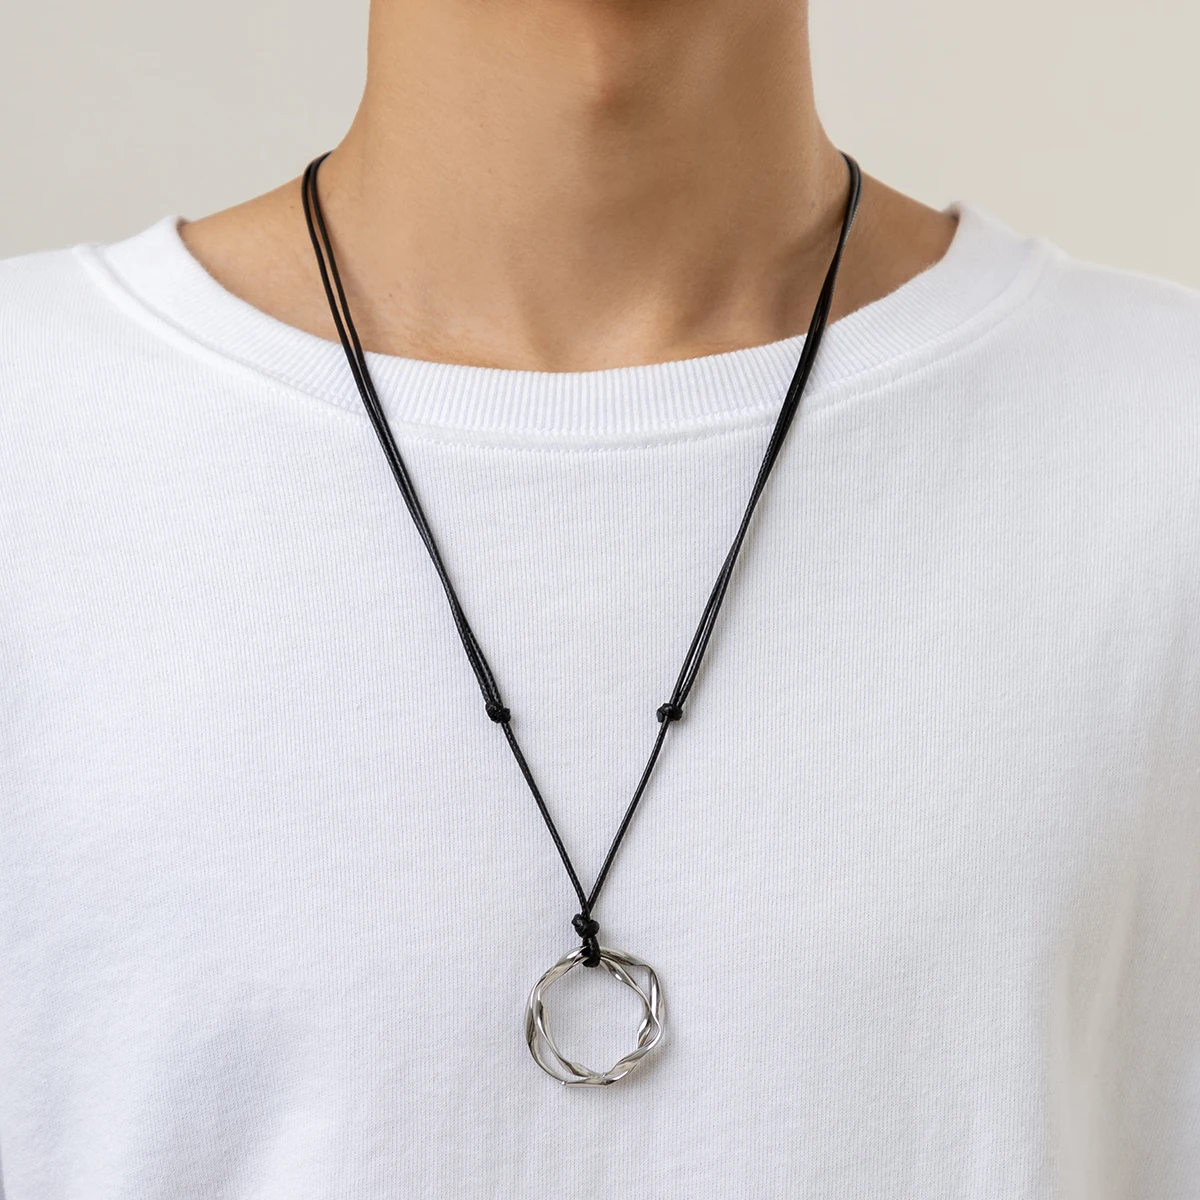 Купи KunJoe Vintage Silver Color Double Circle Pendant Necklace for Men Simple Adjustable Leather Wax Cord Choker Necklace Jewelry за 119 рублей в магазине AliExpress